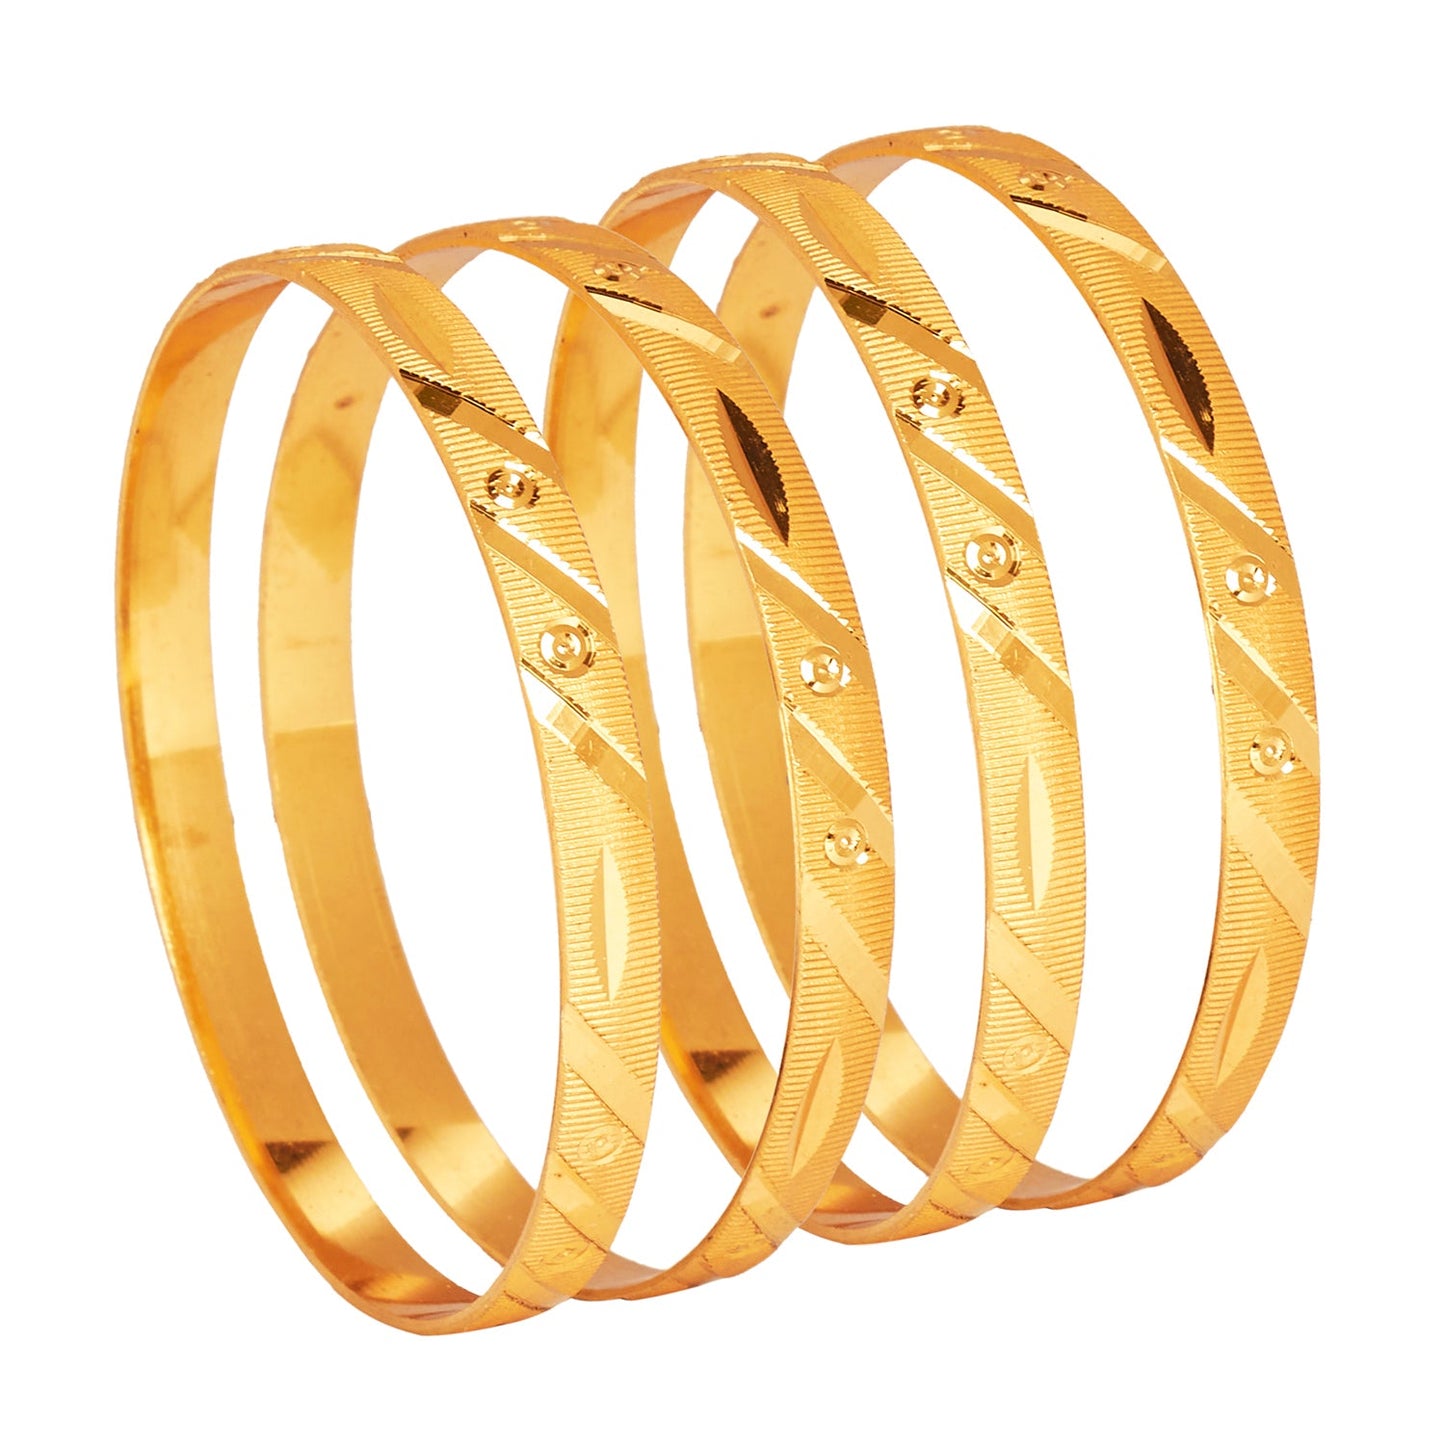 24K Fine Gold Plated Traditional Designer Bangles for Women (Pack of 4) SJ_3307 - Shining Jewel